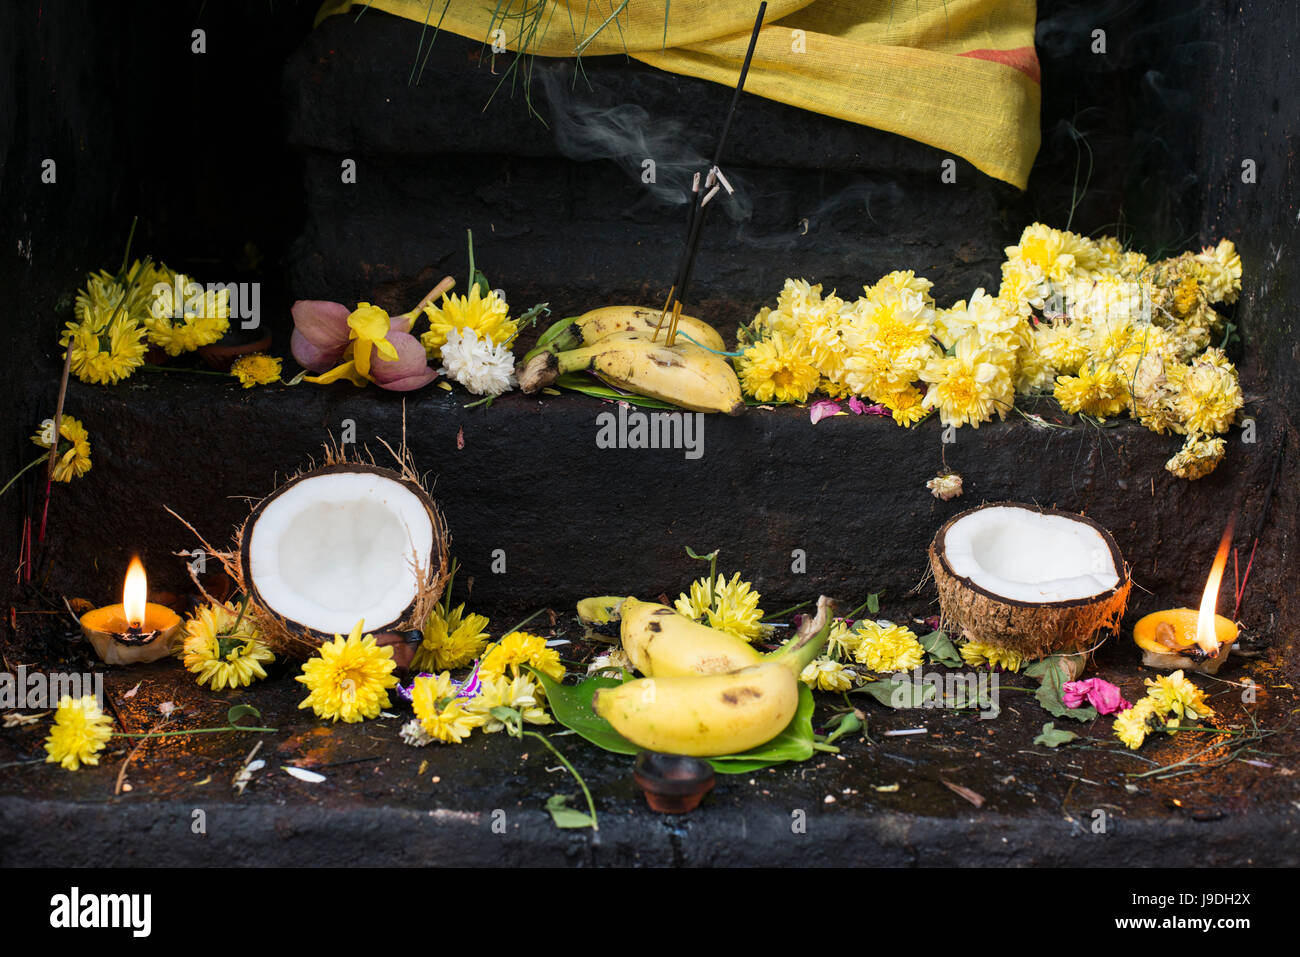 Offerings of fruit and flowers adorn a shrine at the Arunachaleshwara Temple in Tiruvannamalai, Tamil Nadu, India Stock Photo